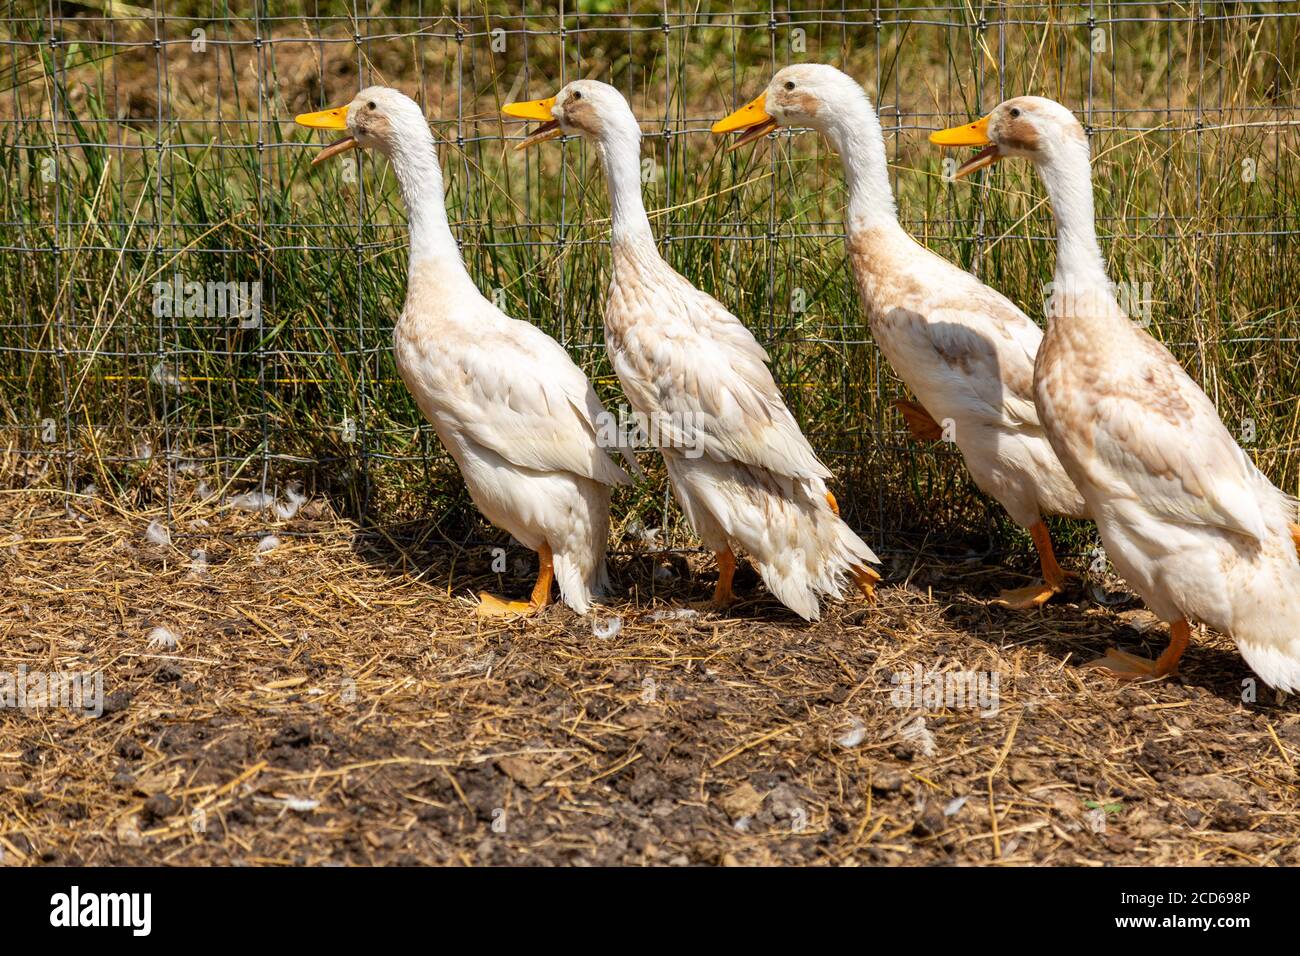 A raft of four Indian Runner ducks march across their DeKalb County, Indiana barnyard. Stock Photo